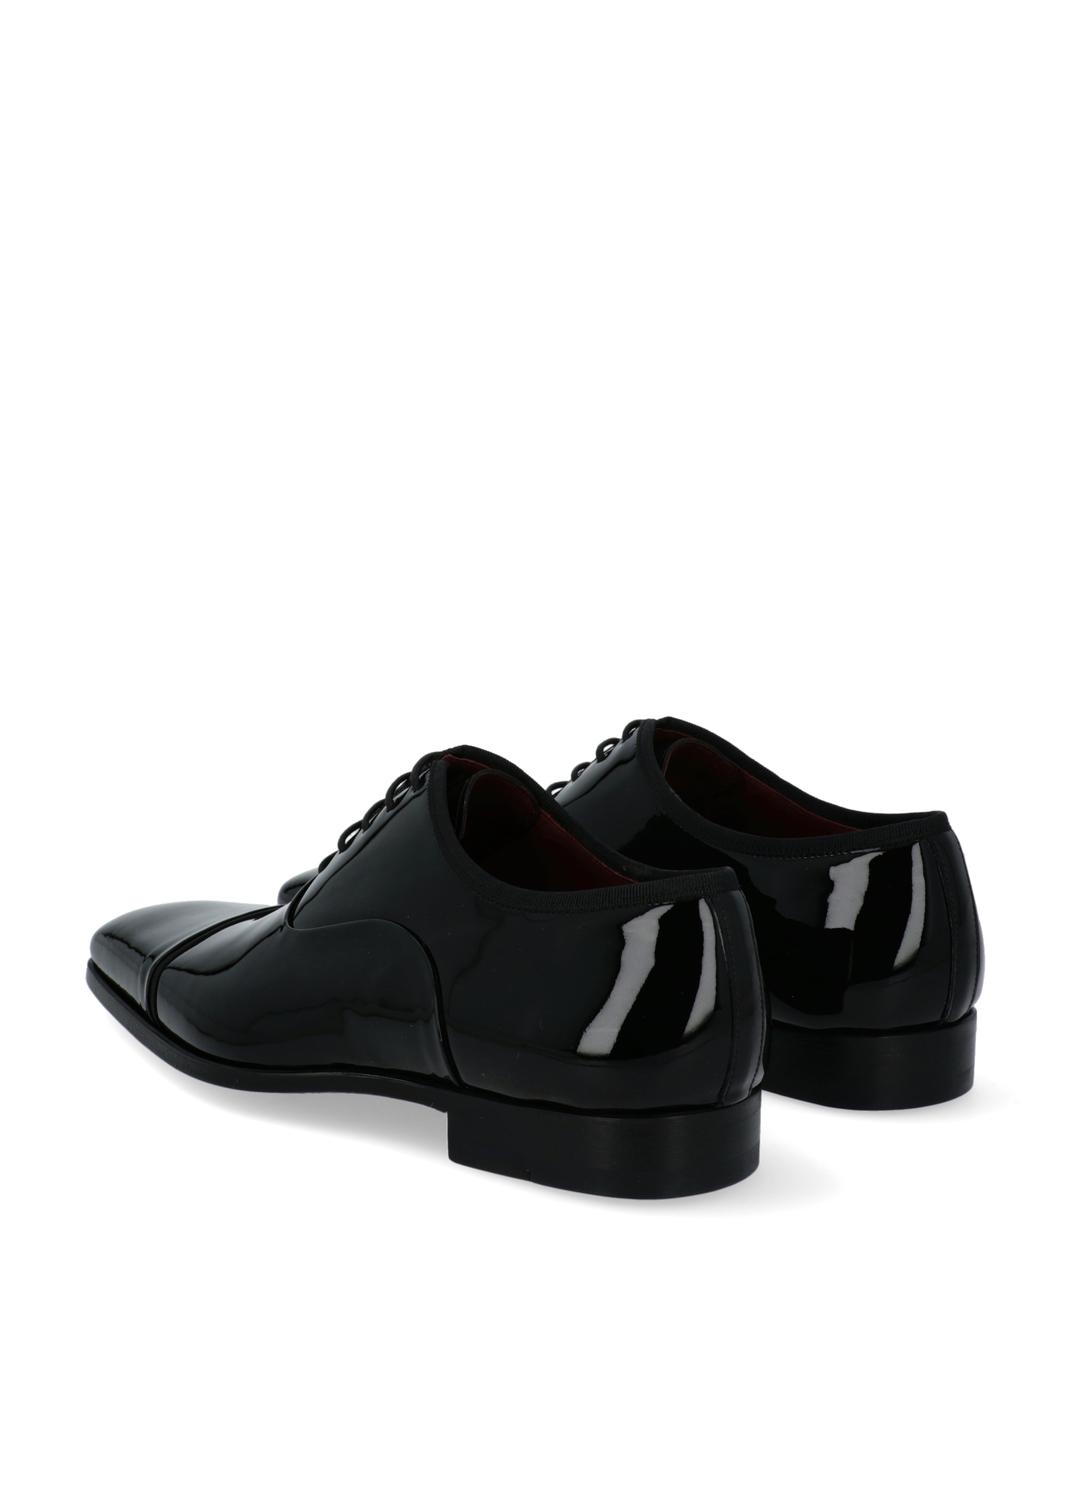 Magnanni zapatos Oxford MGN-24534